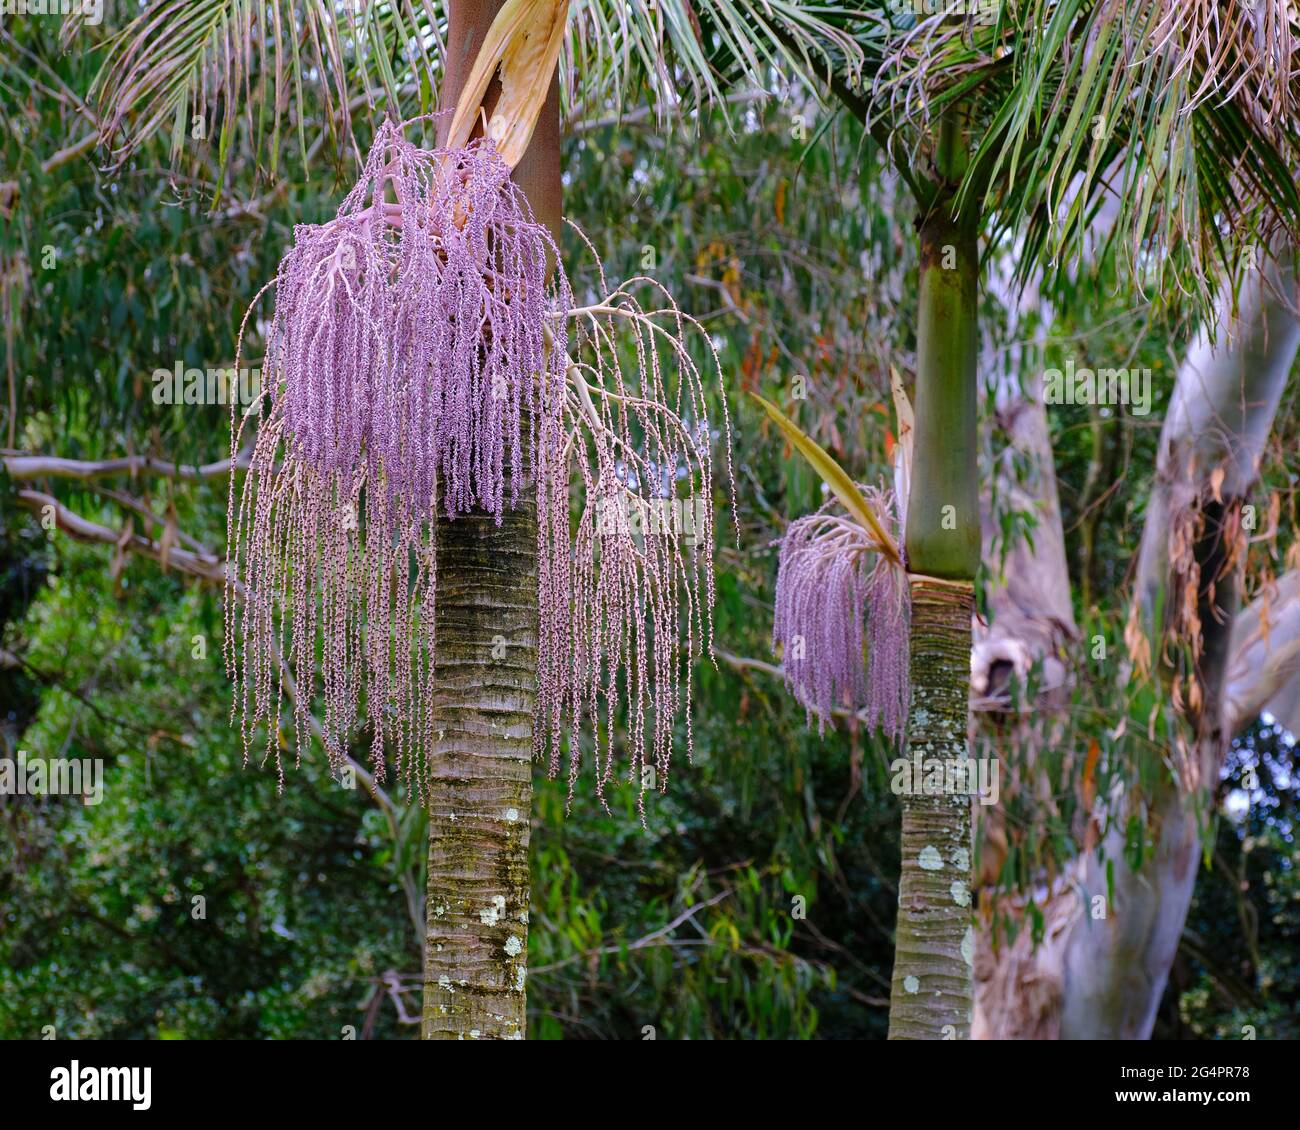 Bangalow Palm Seed Pods Stockfoto